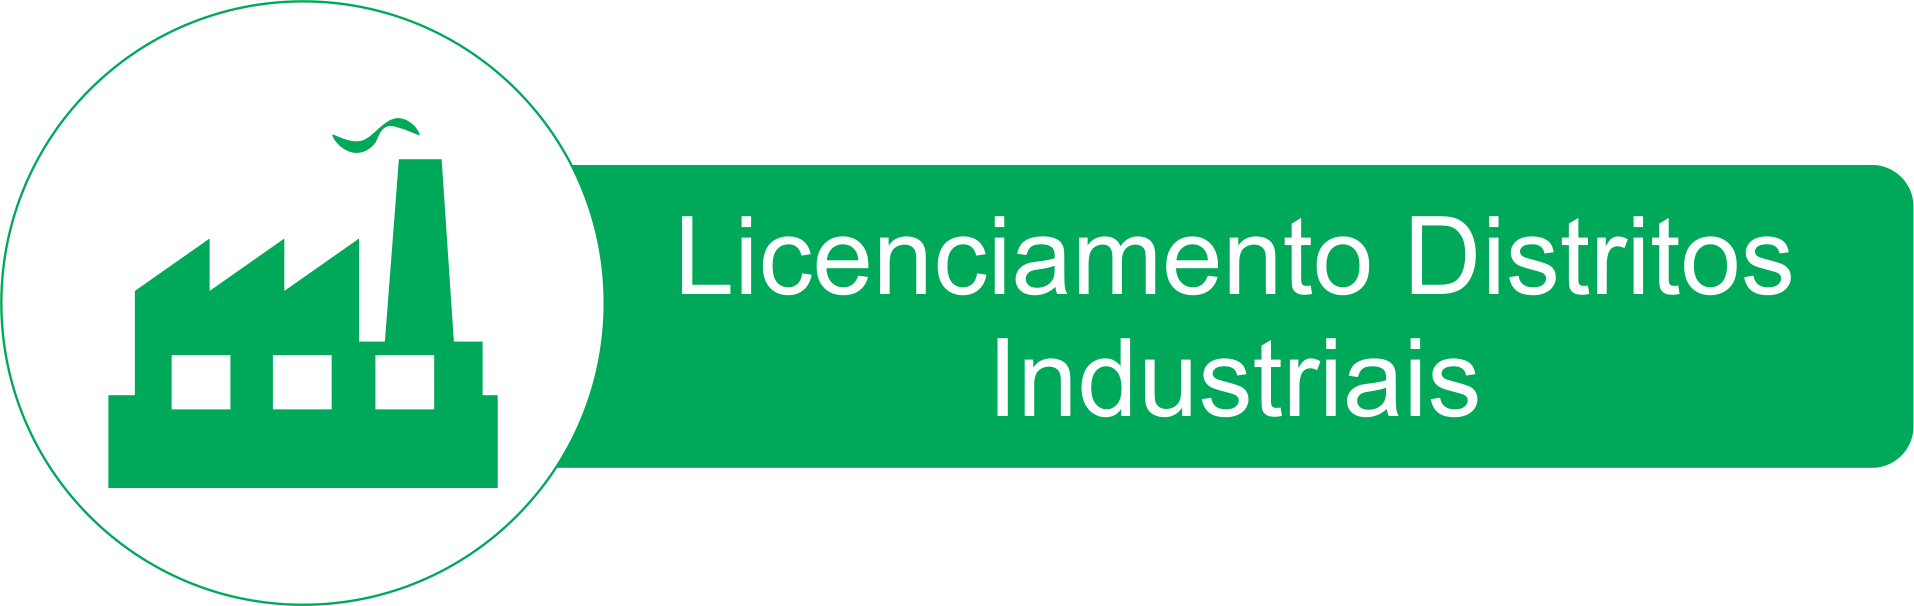 Licenciamento de Distritos Industriais